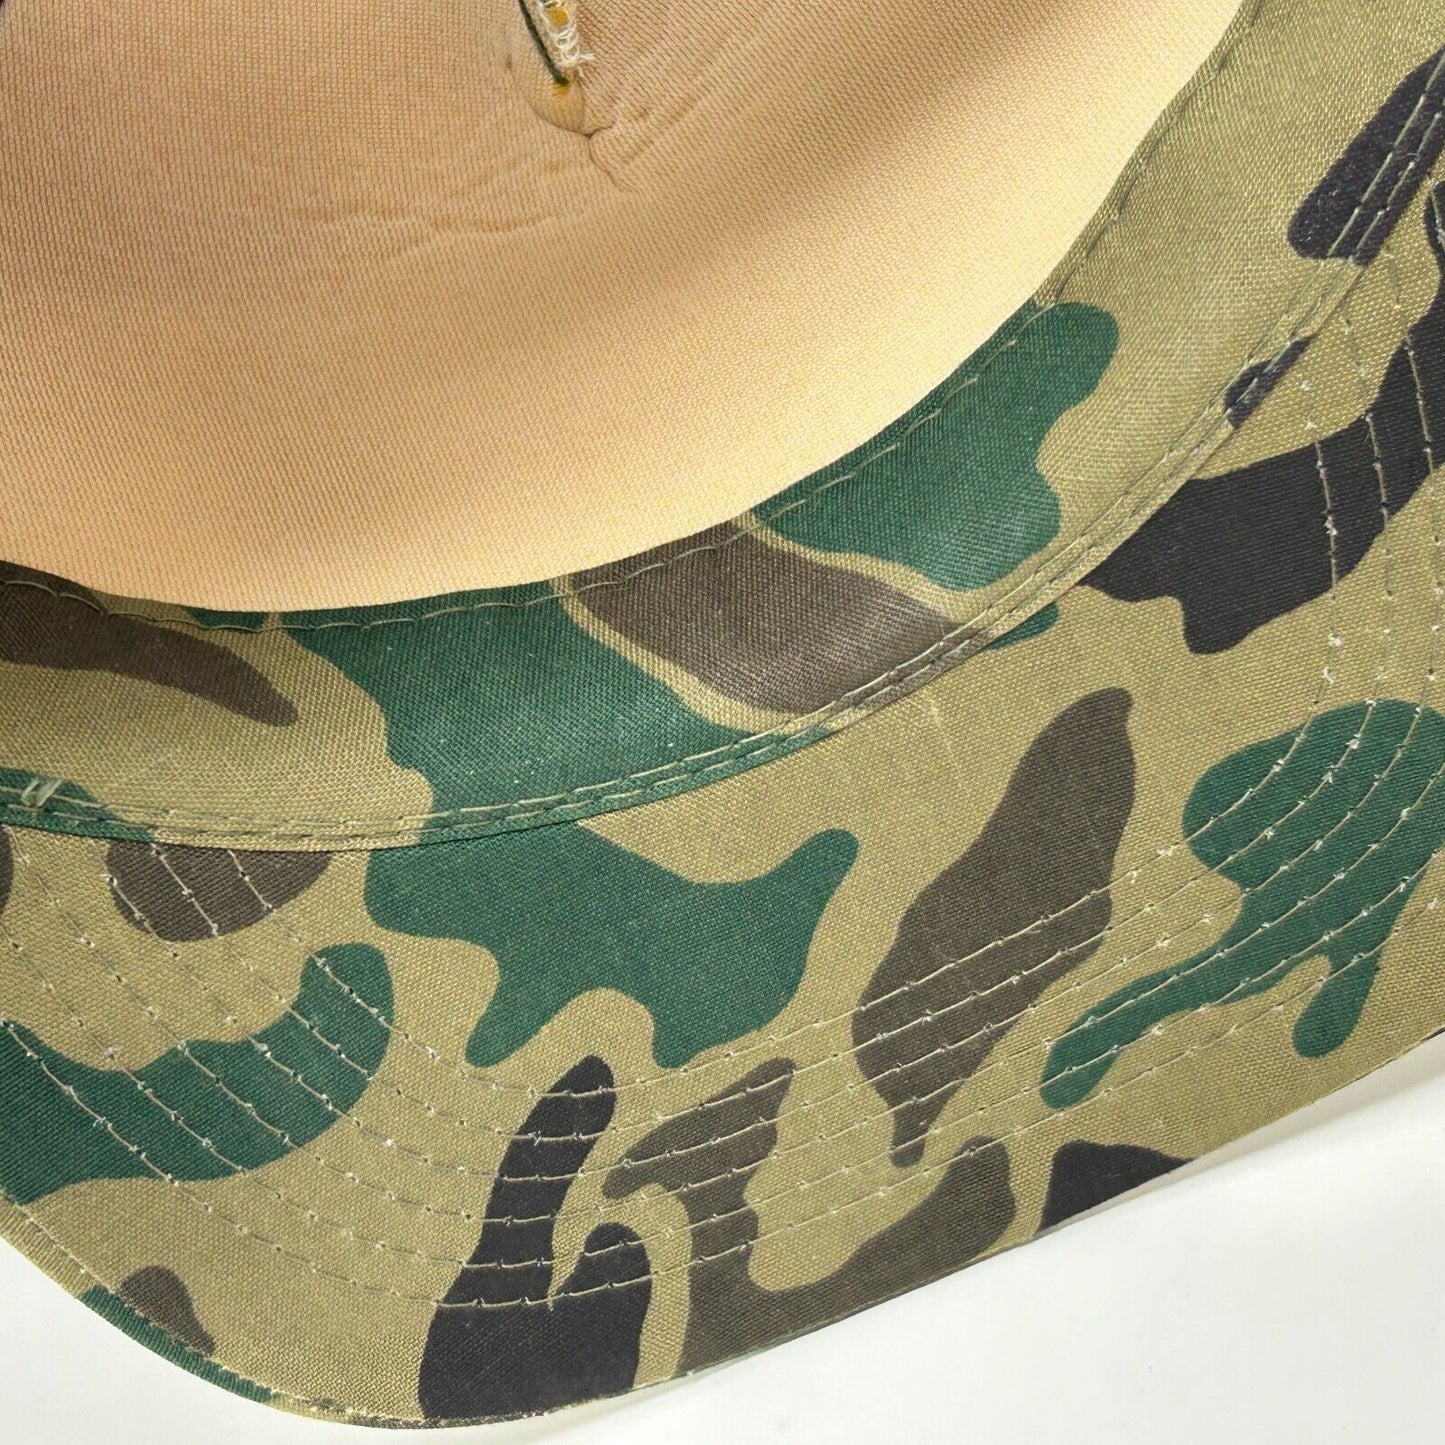 Western Pipeline Trucker Hat Vintage 80s Green Camouflage Snapback Baseball Cap